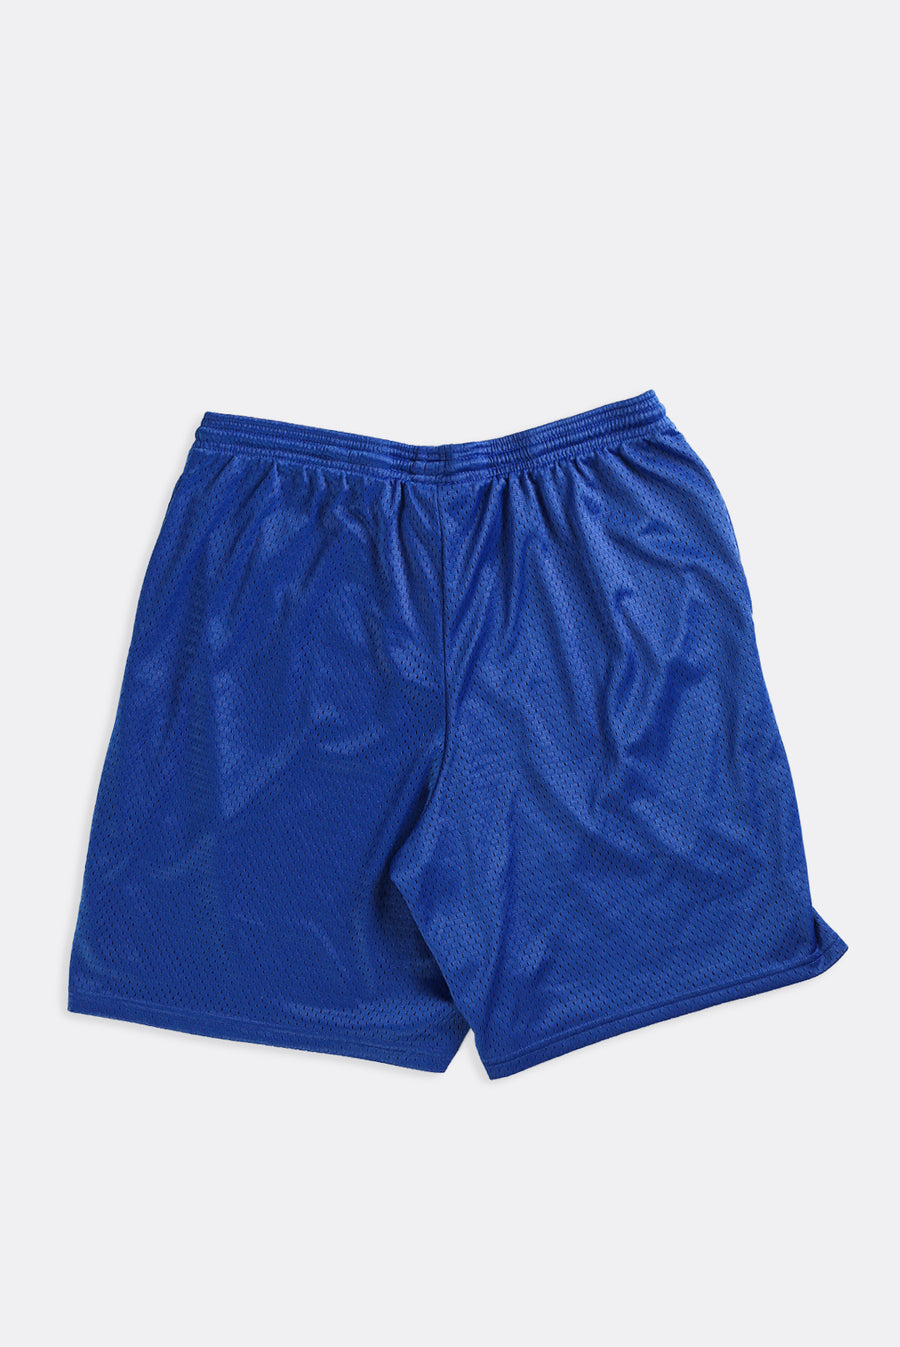 Vintage Champion Shorts - M, L